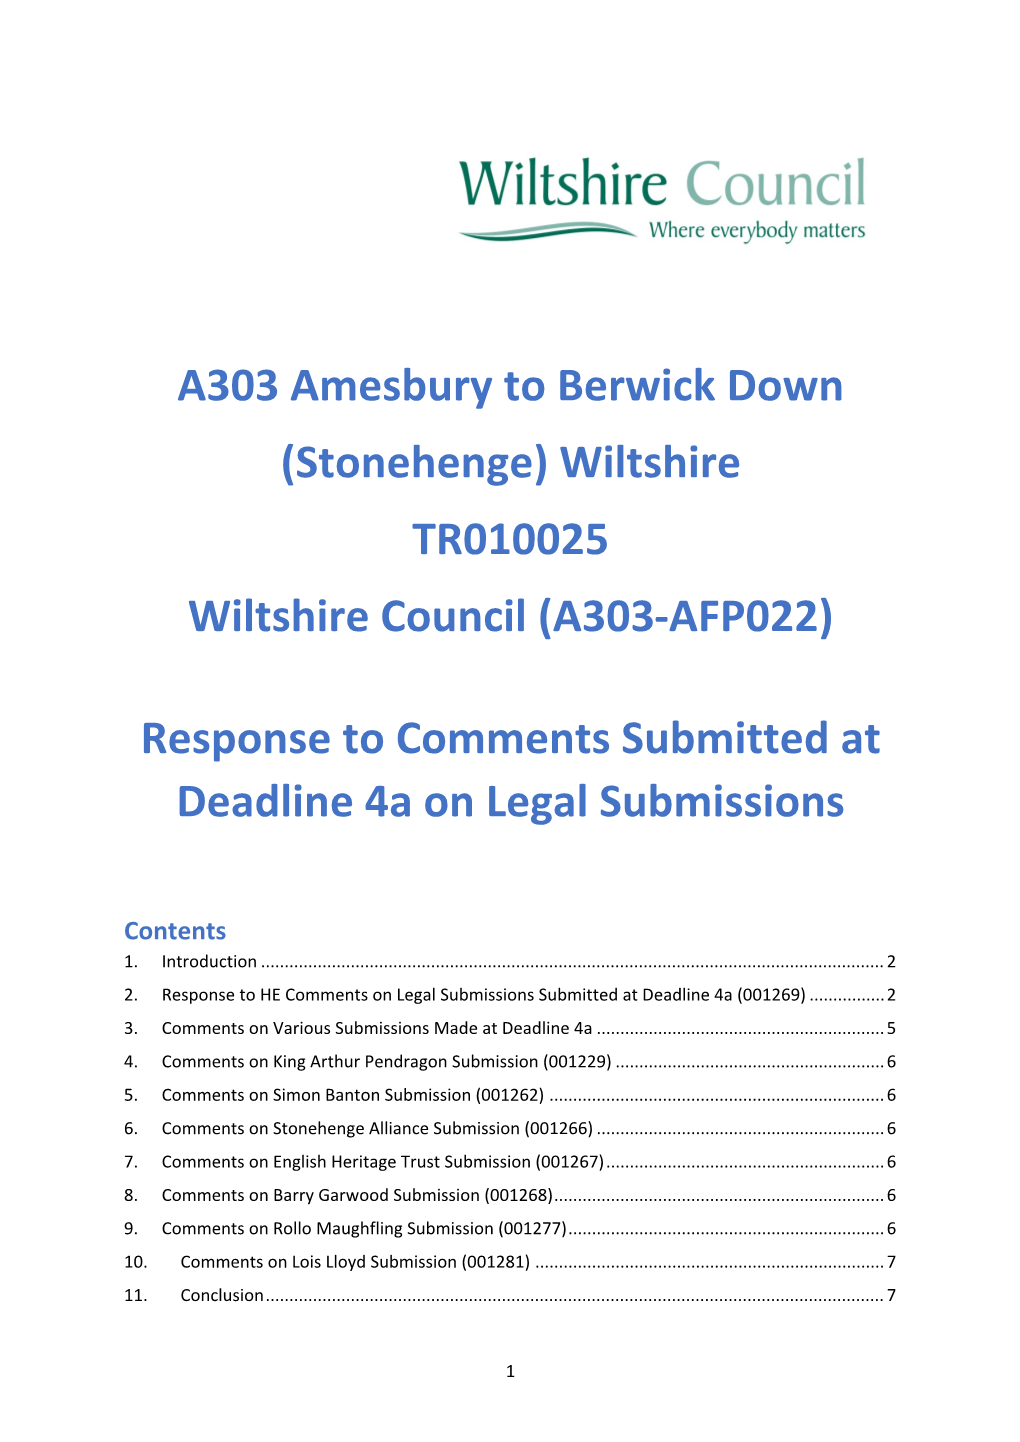 A303 Amesbury to Berwick Down (Stonehenge) Wiltshire TR010025 Wiltshire Council (A303-AFP022)